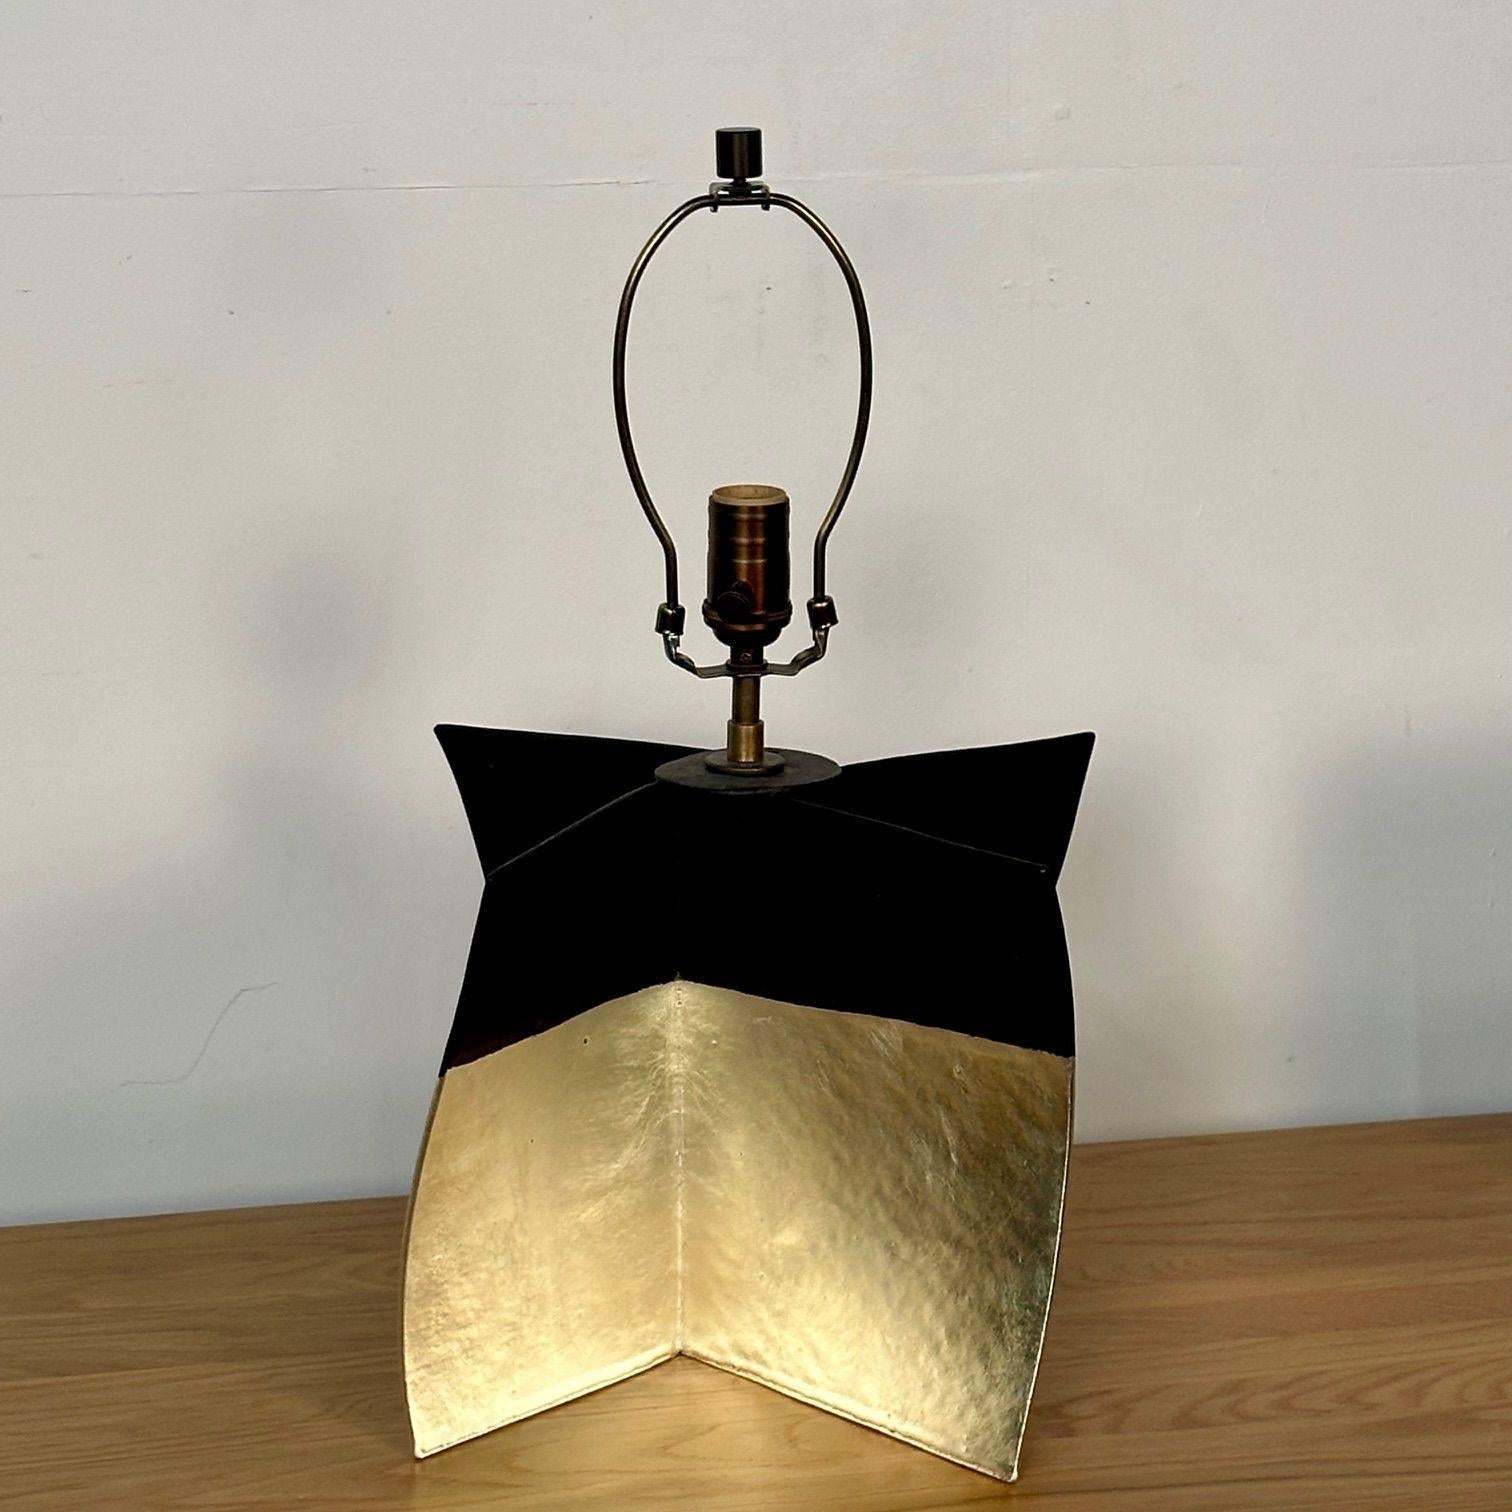 Dumais Made, Contemporary, Ceramic Croisillon Table Lamps, Gold Glaze, 2021 For Sale 3